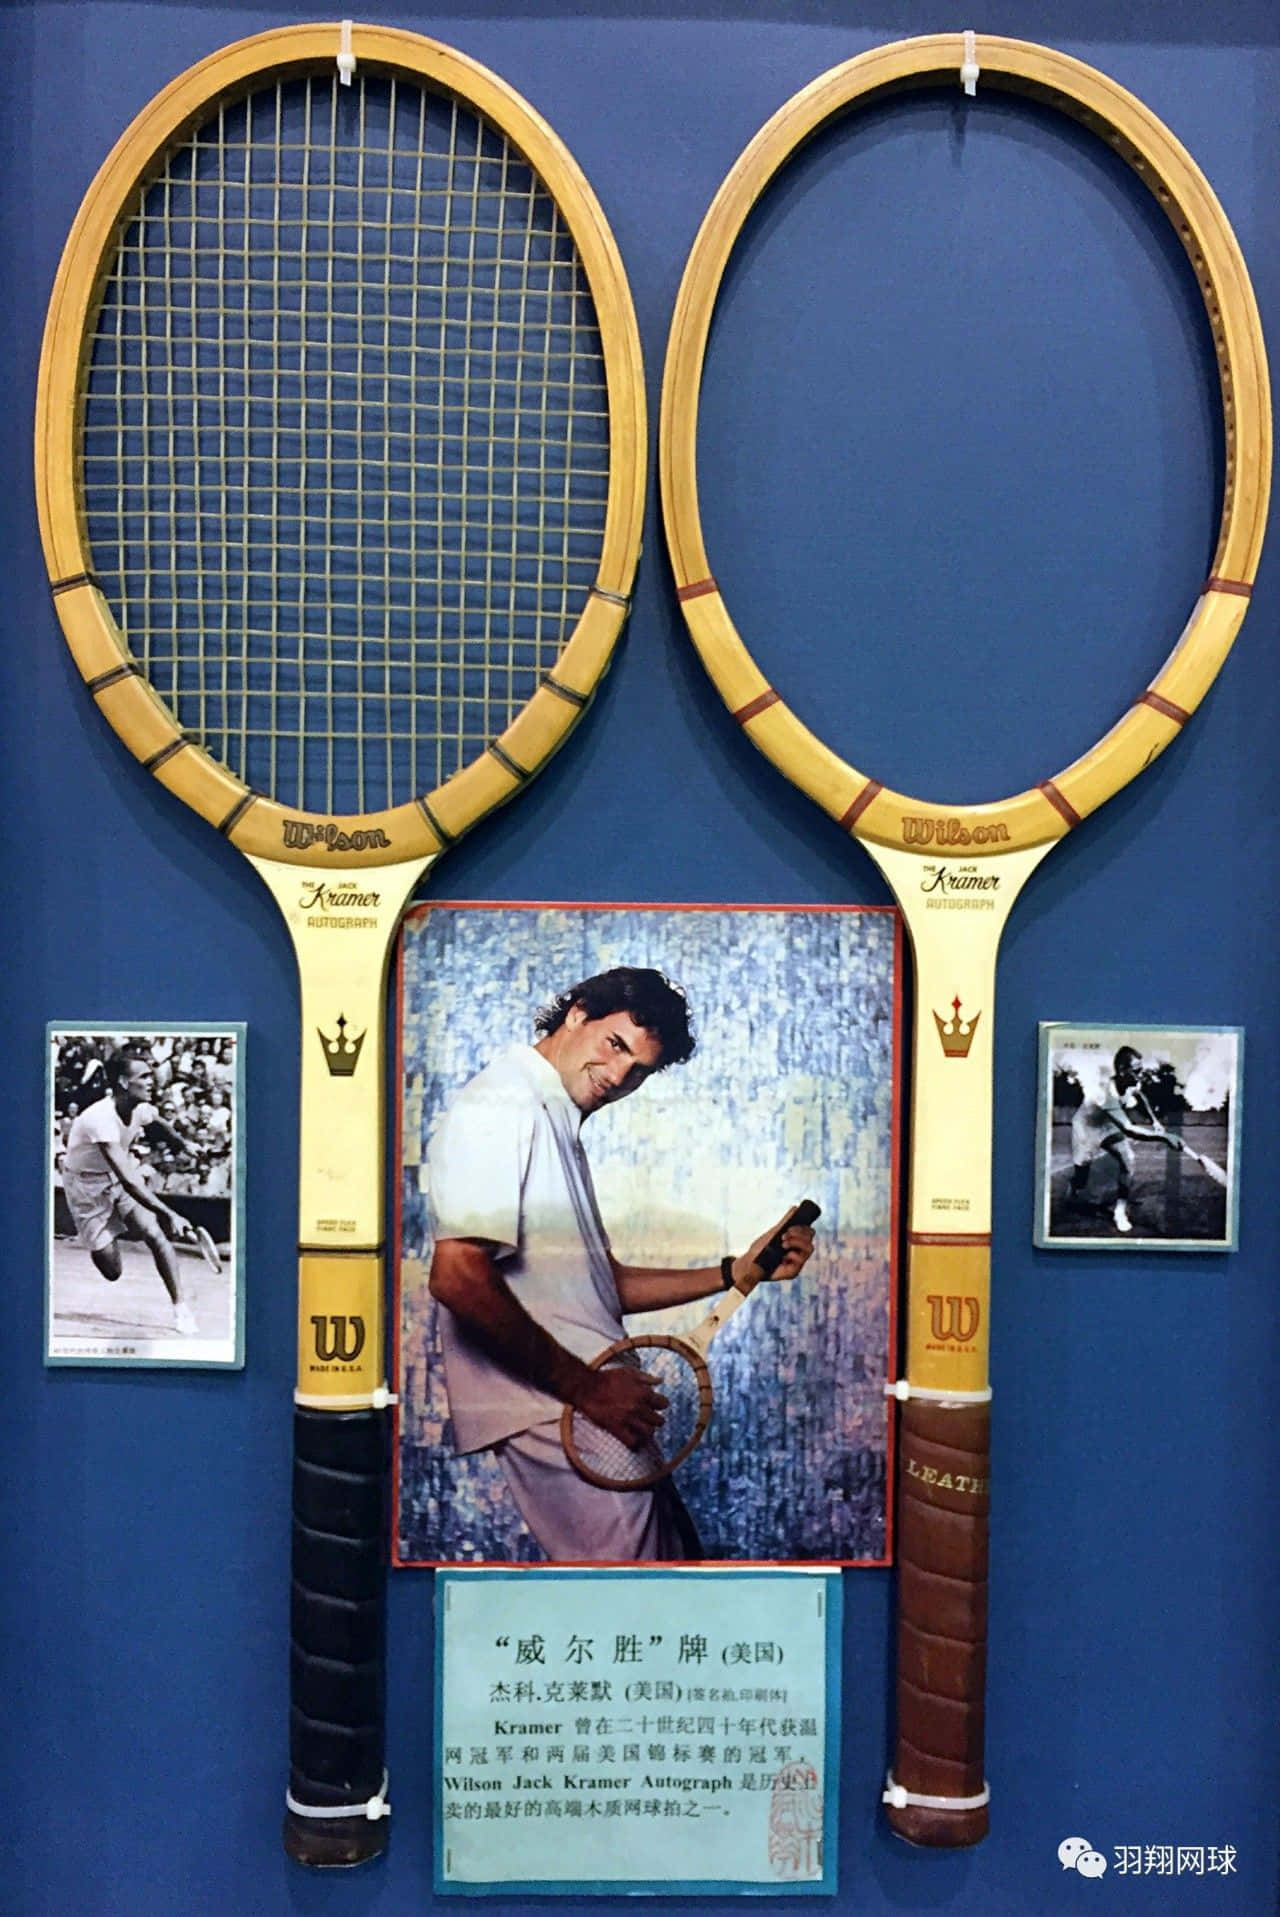 Jack Kramer Wilson Tennis Racket Samling Wallpaper